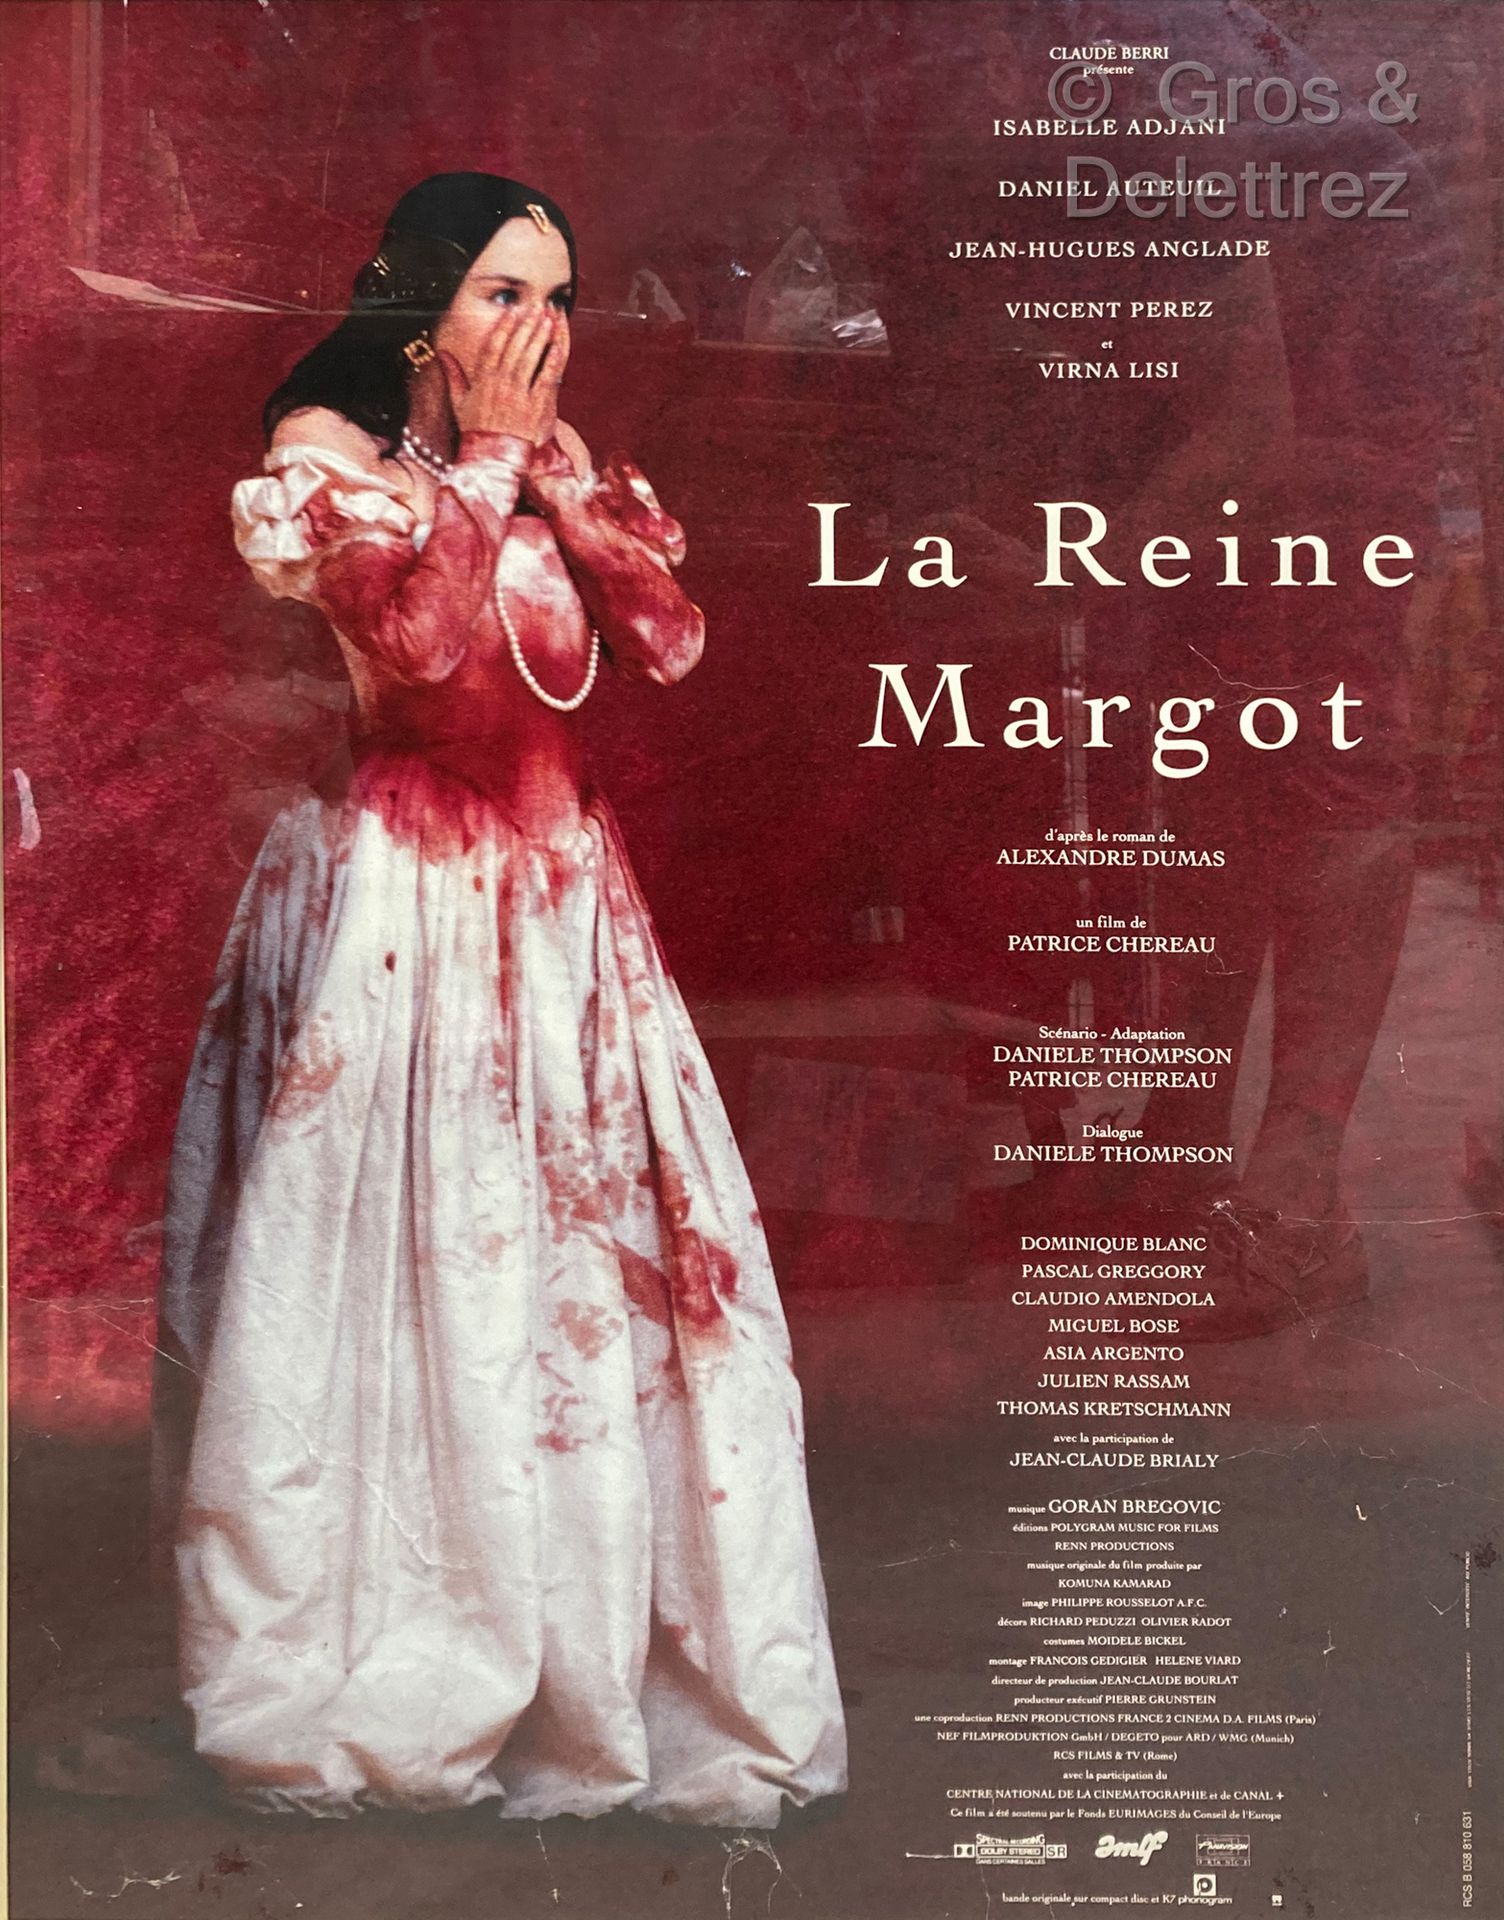 Patrice Chereau REINA MARGOT

Cartel de la película

79 x 59 cm bajo vidrio